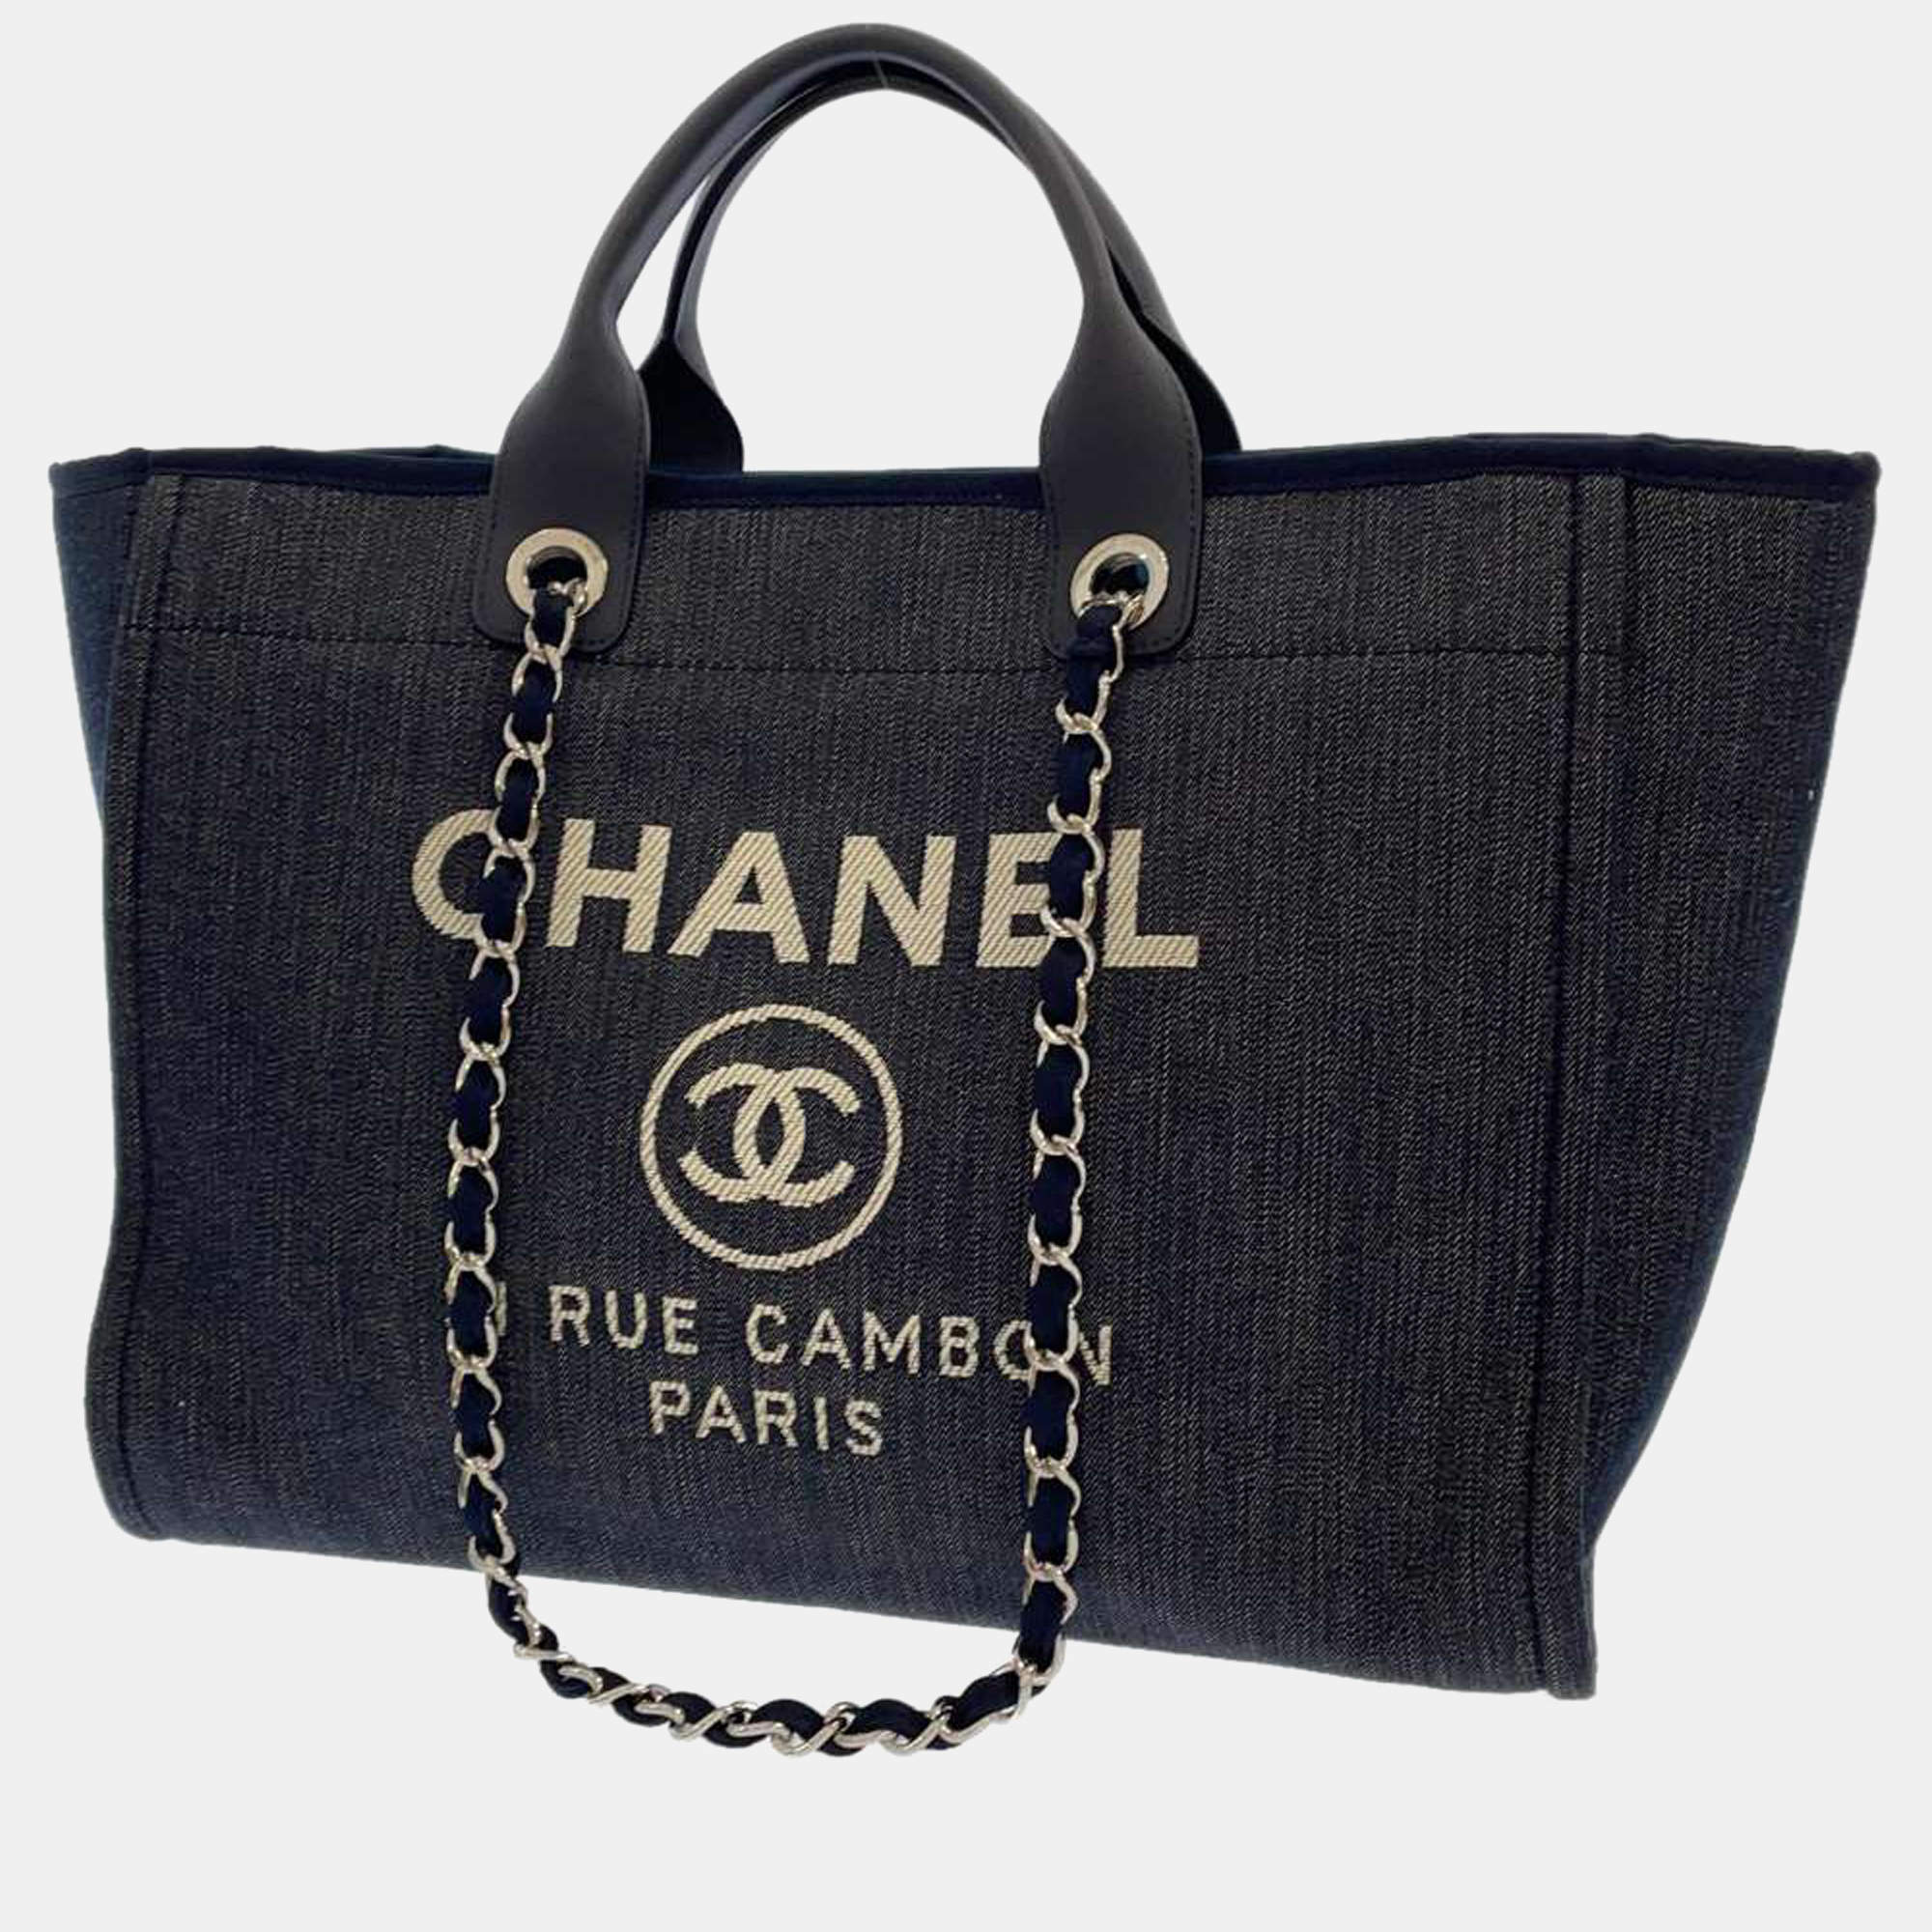 Chanel Black Canvas Large Deauville Tote Bag